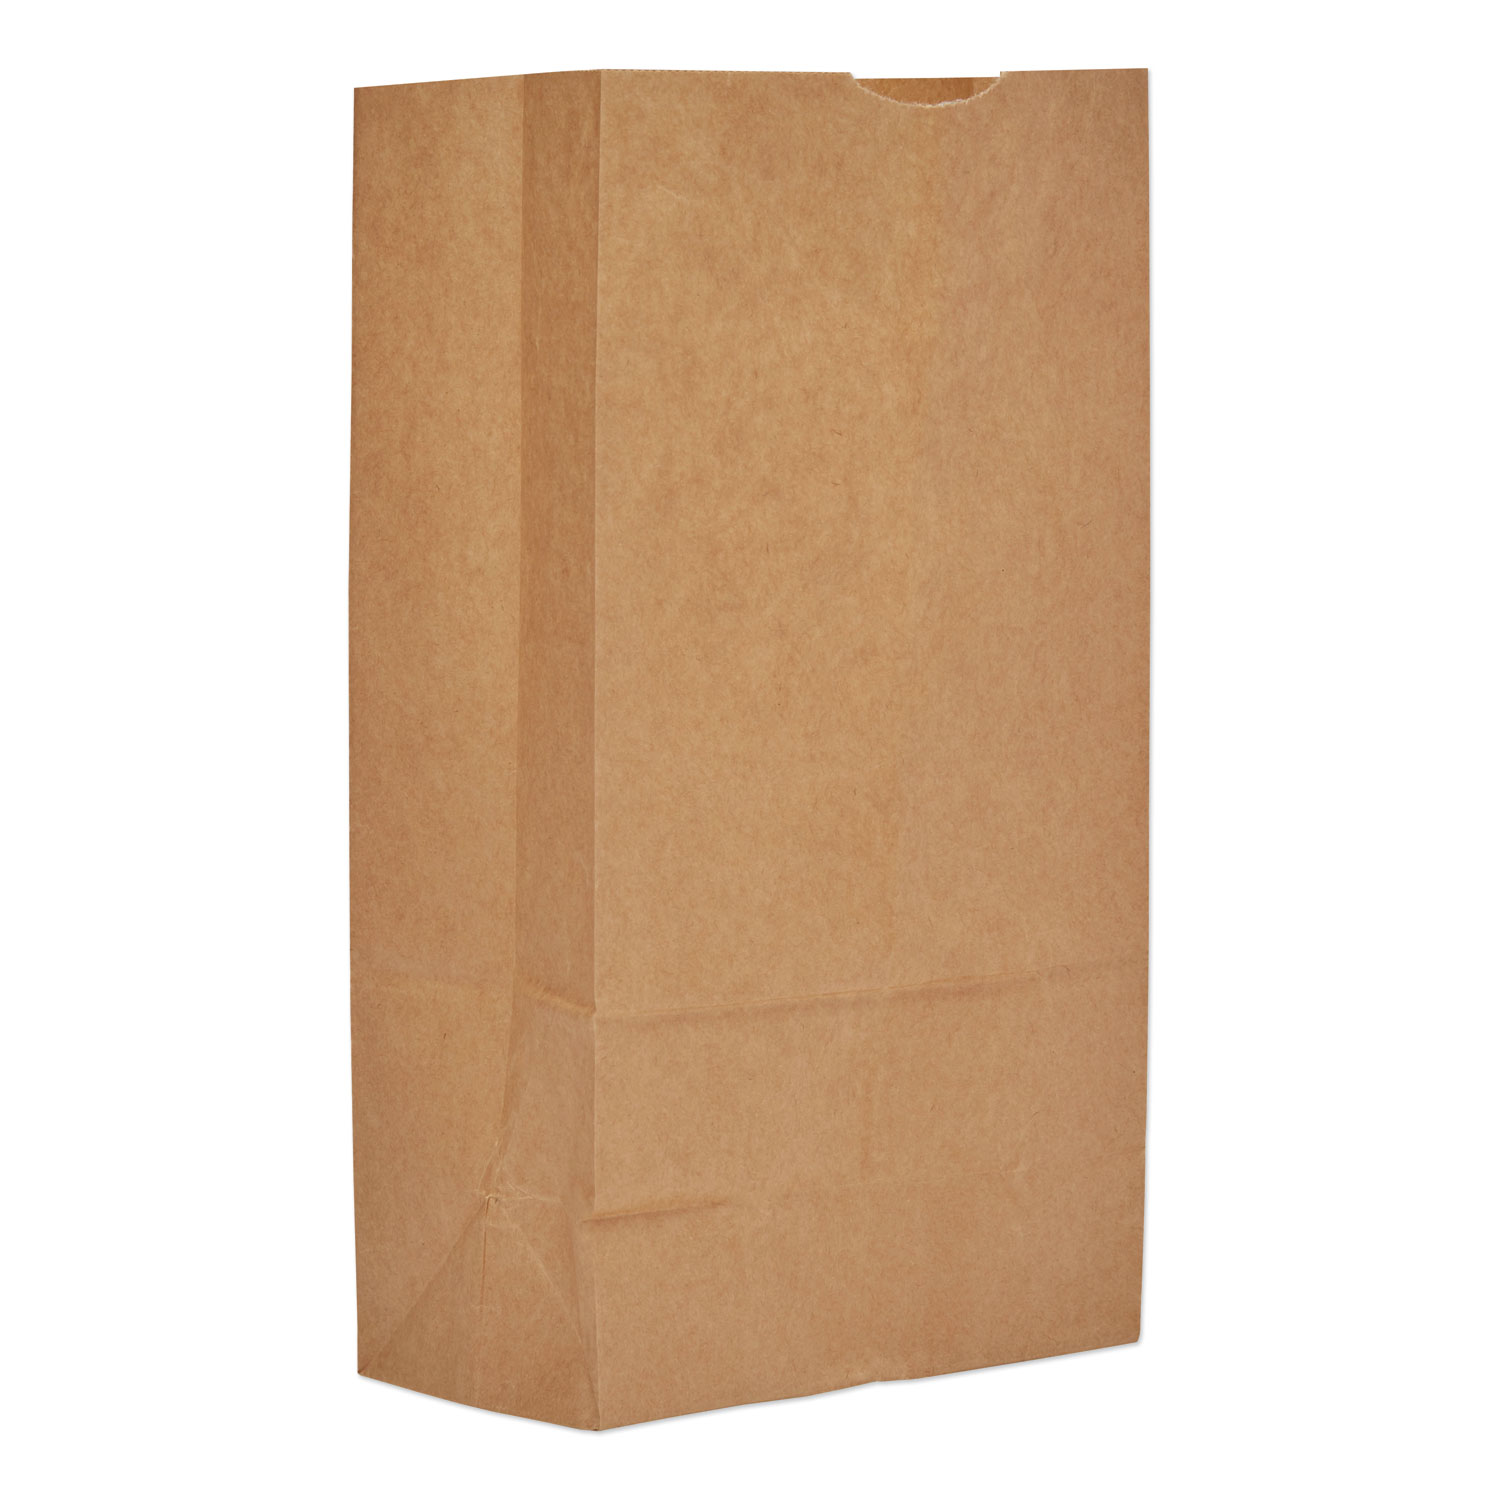  General 18412 Grocery Paper Bags, 12#, 7.06w x 4.5d x 13.75h, Kraft, 500 Bags (BAGGK12500) 